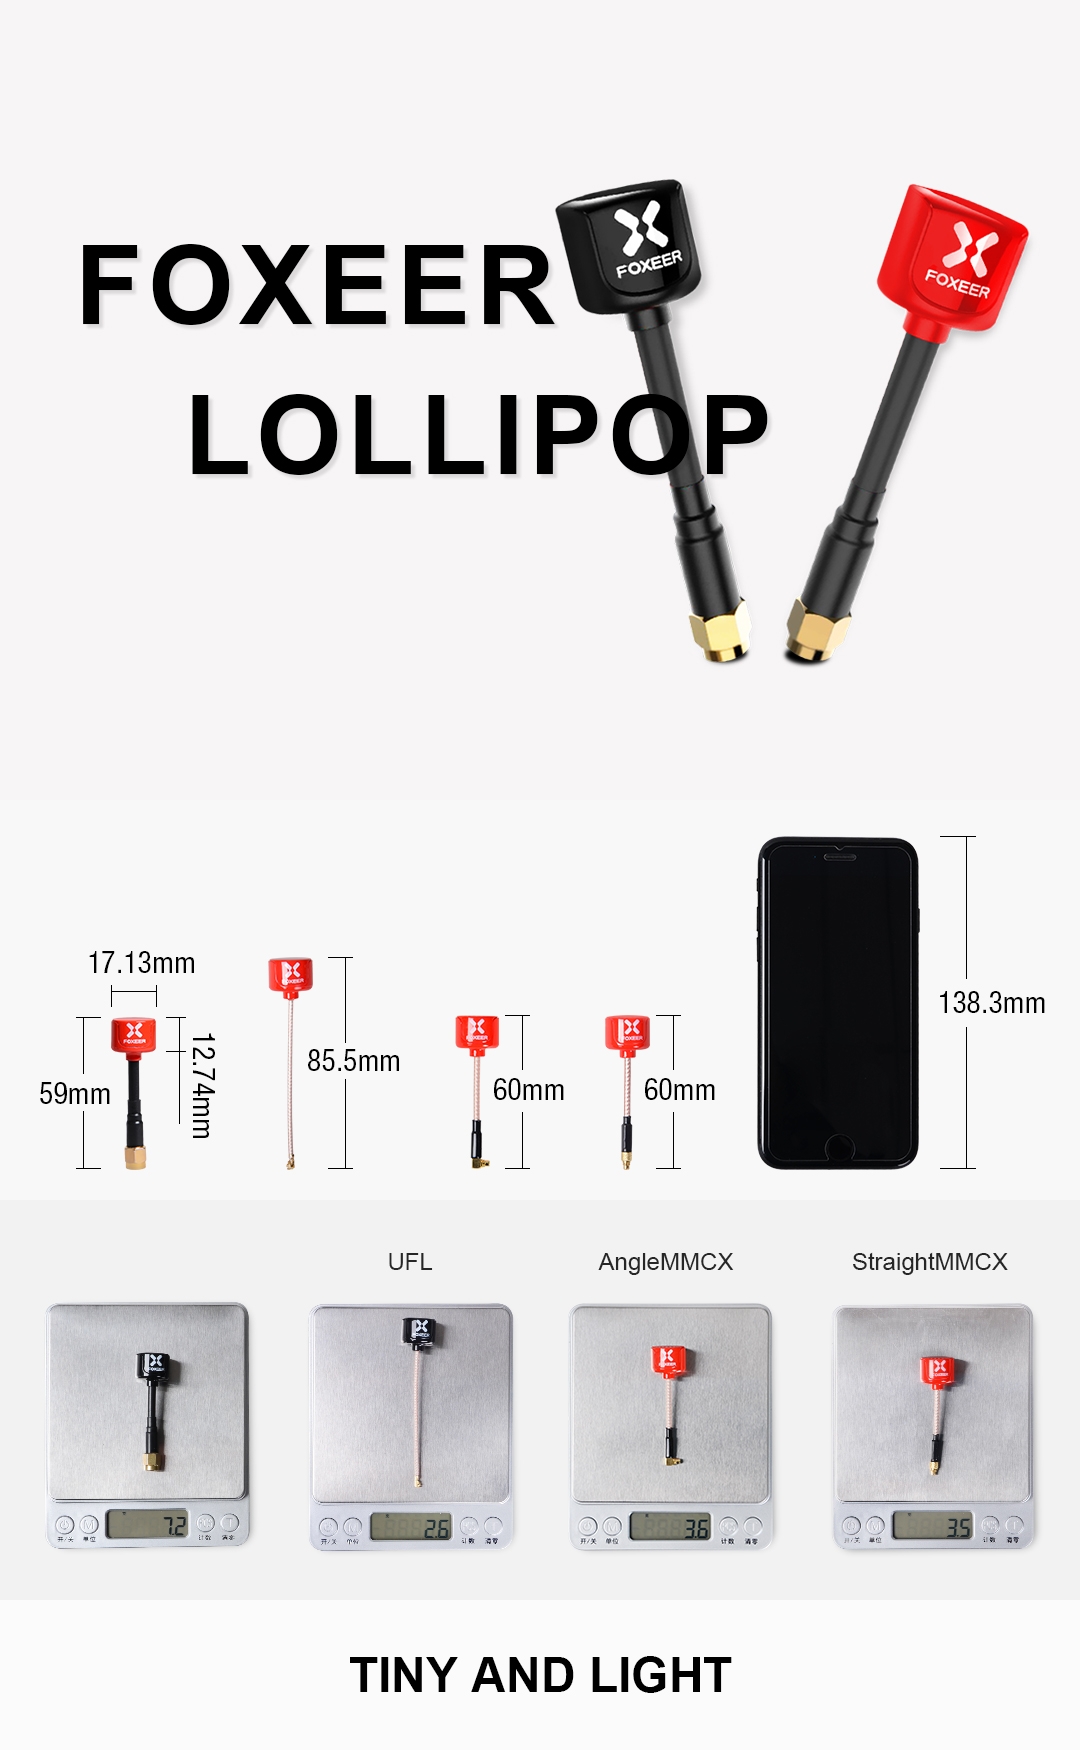 2pcs Foxeer Lollipop 85.5mm 5.8G 2.3dBi RHCP UFL Super Mini FPV Antenna Red/Black For RC Drone